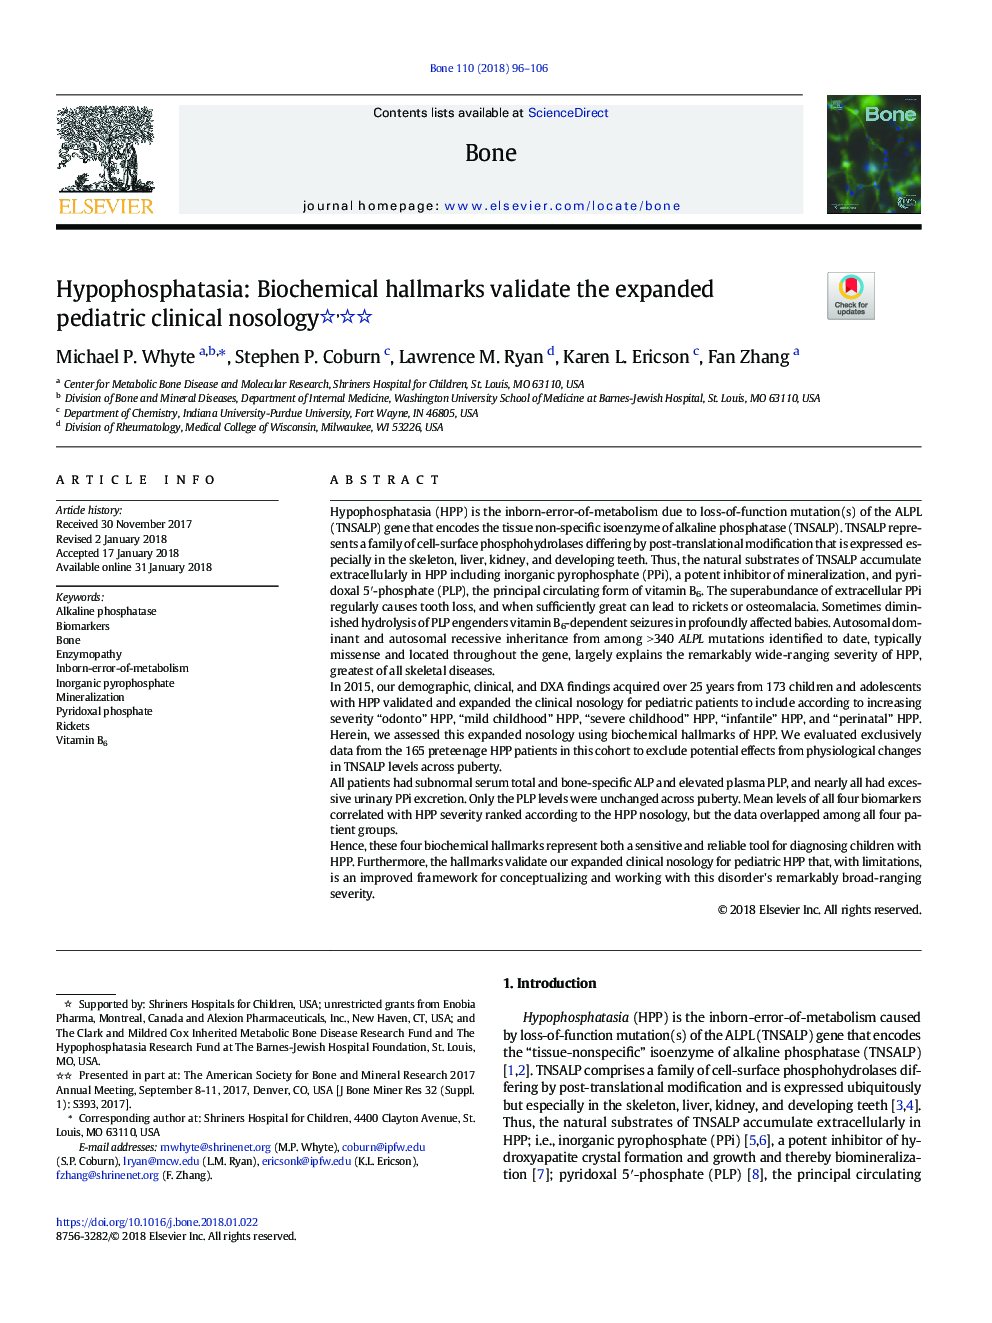 Hypophosphatasia: Biochemical hallmarks validate the expanded pediatric clinical nosology